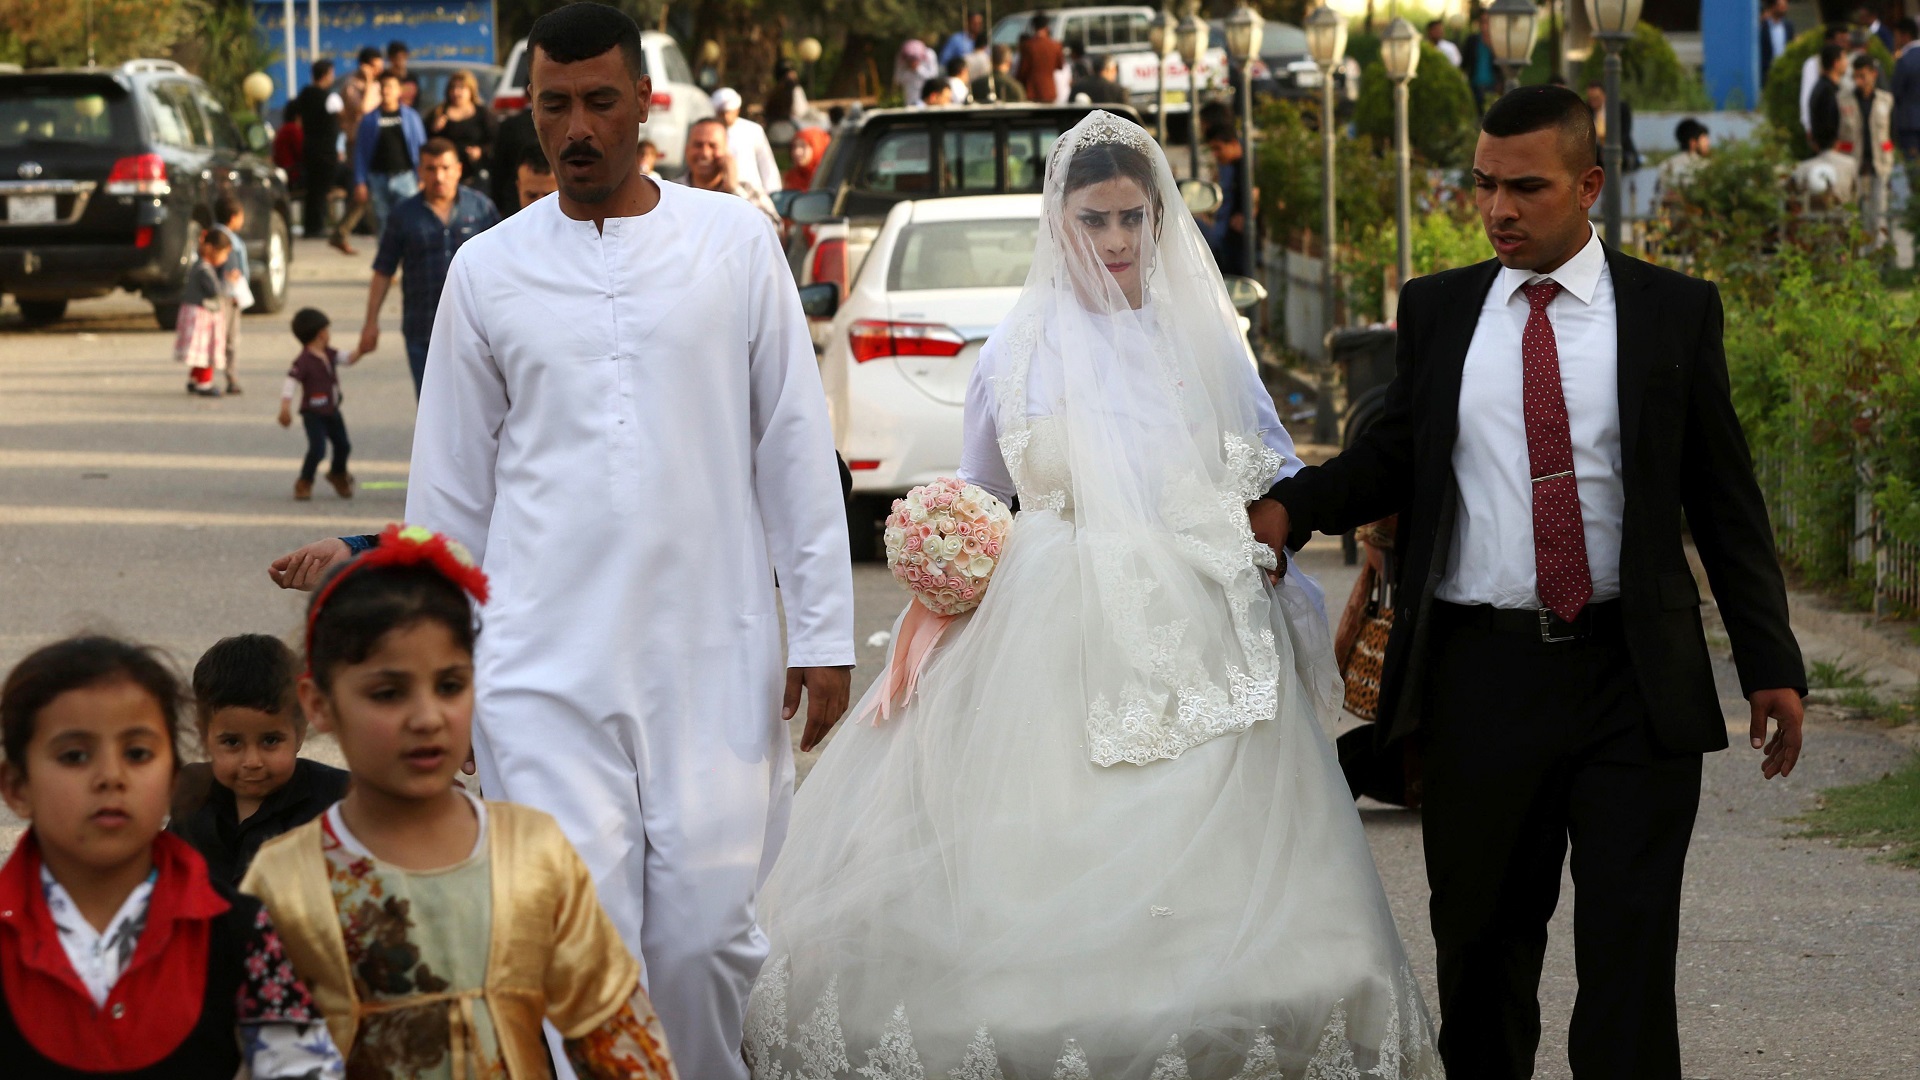 تغريم رجل اقام "حفل زفاف" في بغداد بمبلغ 5 مليون دينار